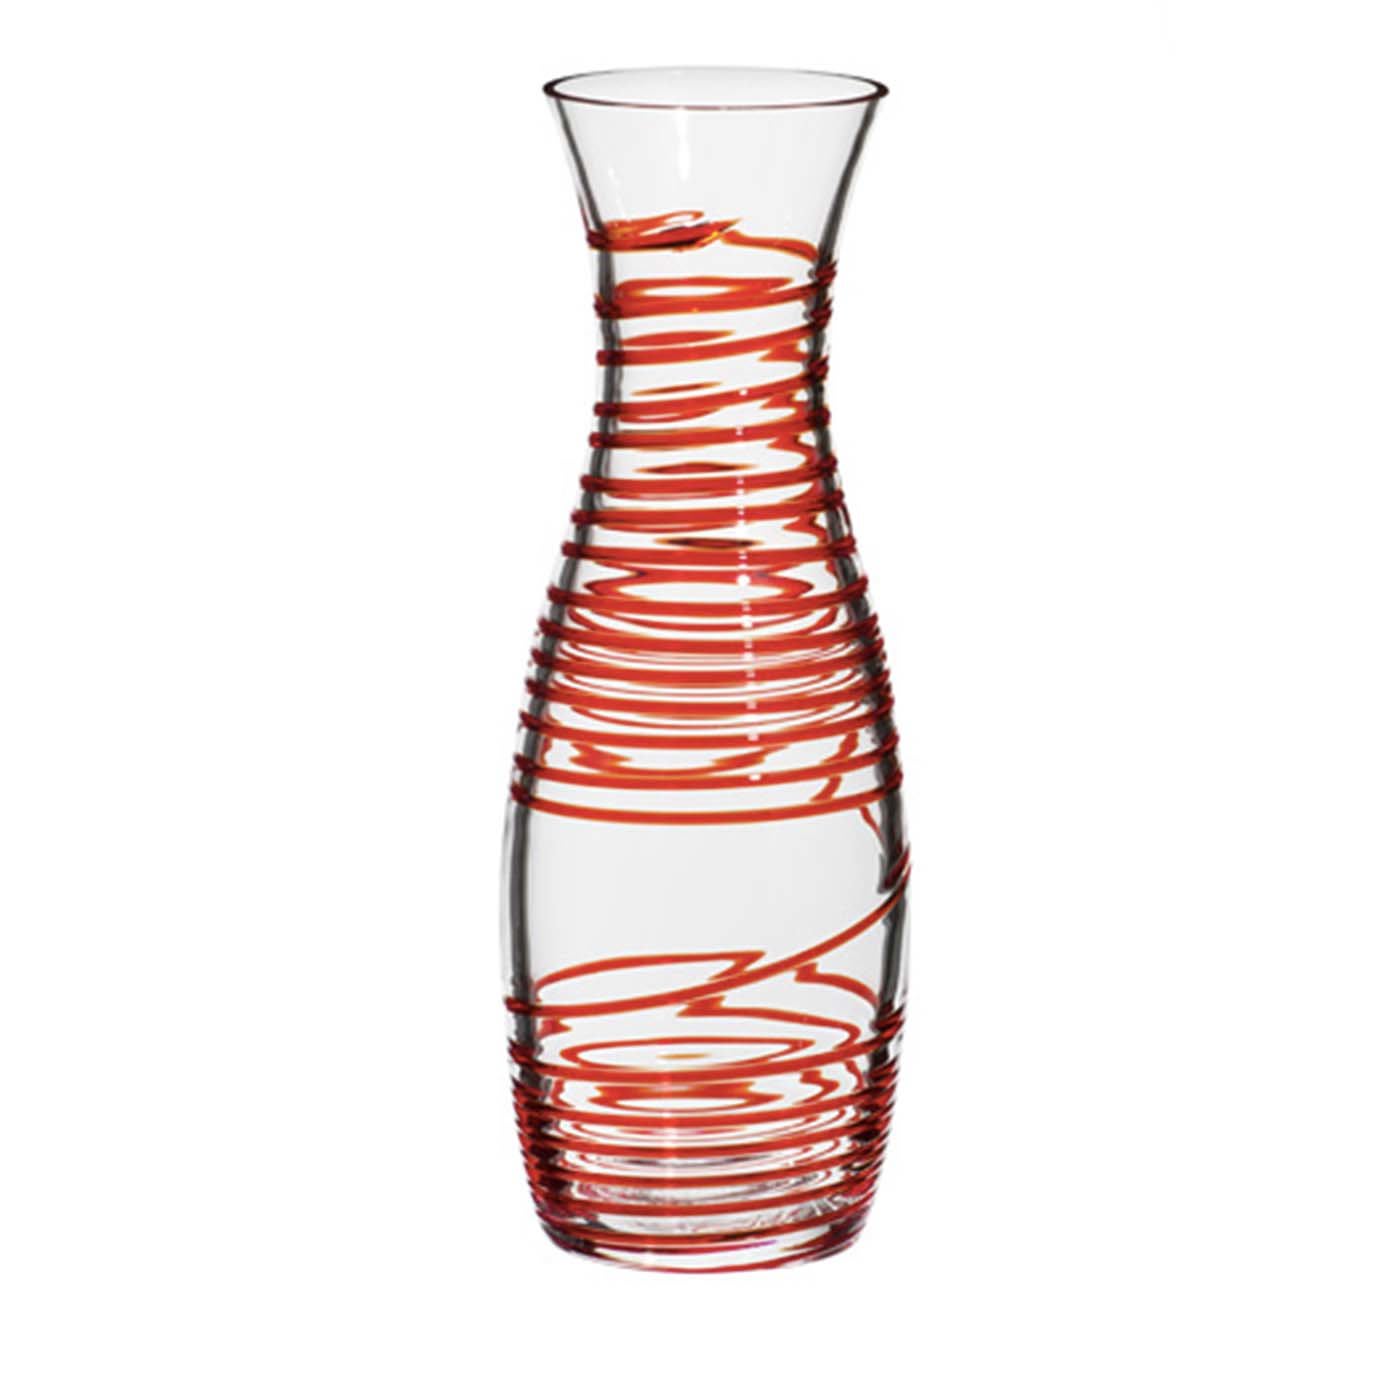 Red Decanter with Stripes - Carlo Moretti